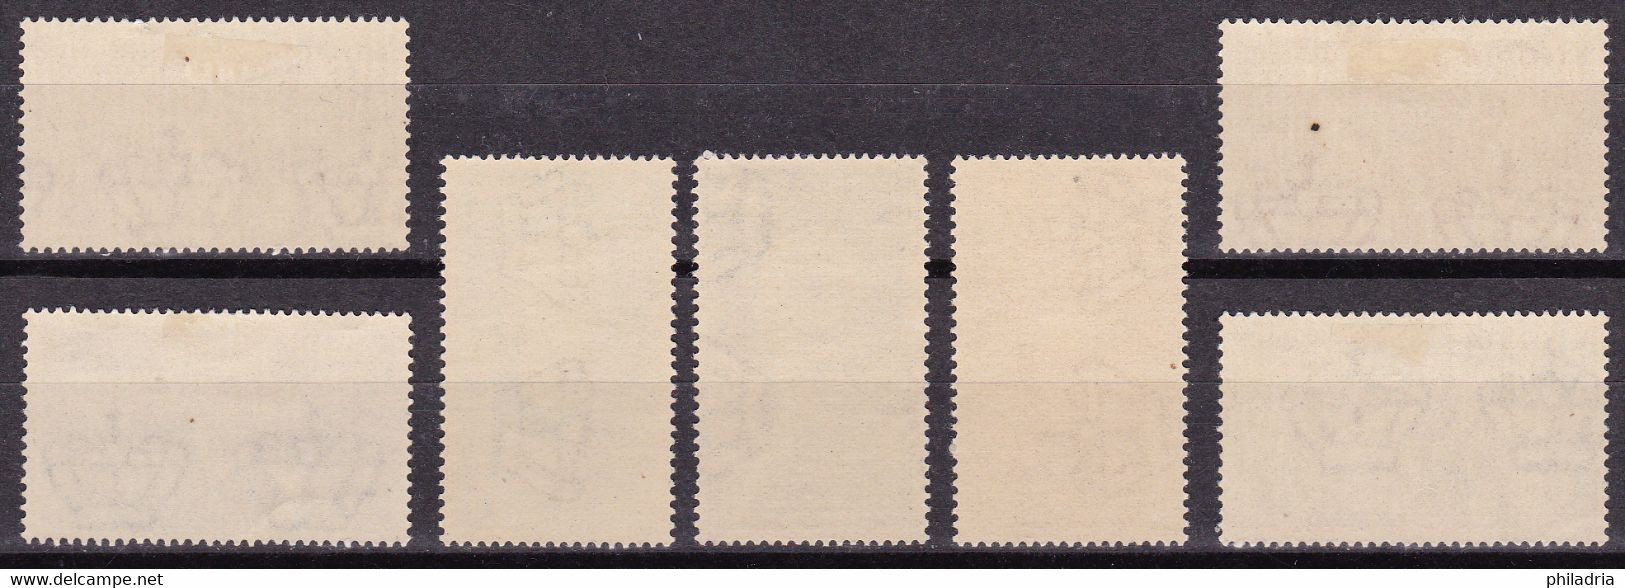 Etiopia, 1936,  Vittorio Emanuele, Complete Set, Horizontal Stamps Hinged Vertical Stamp MNH - Ethiopia